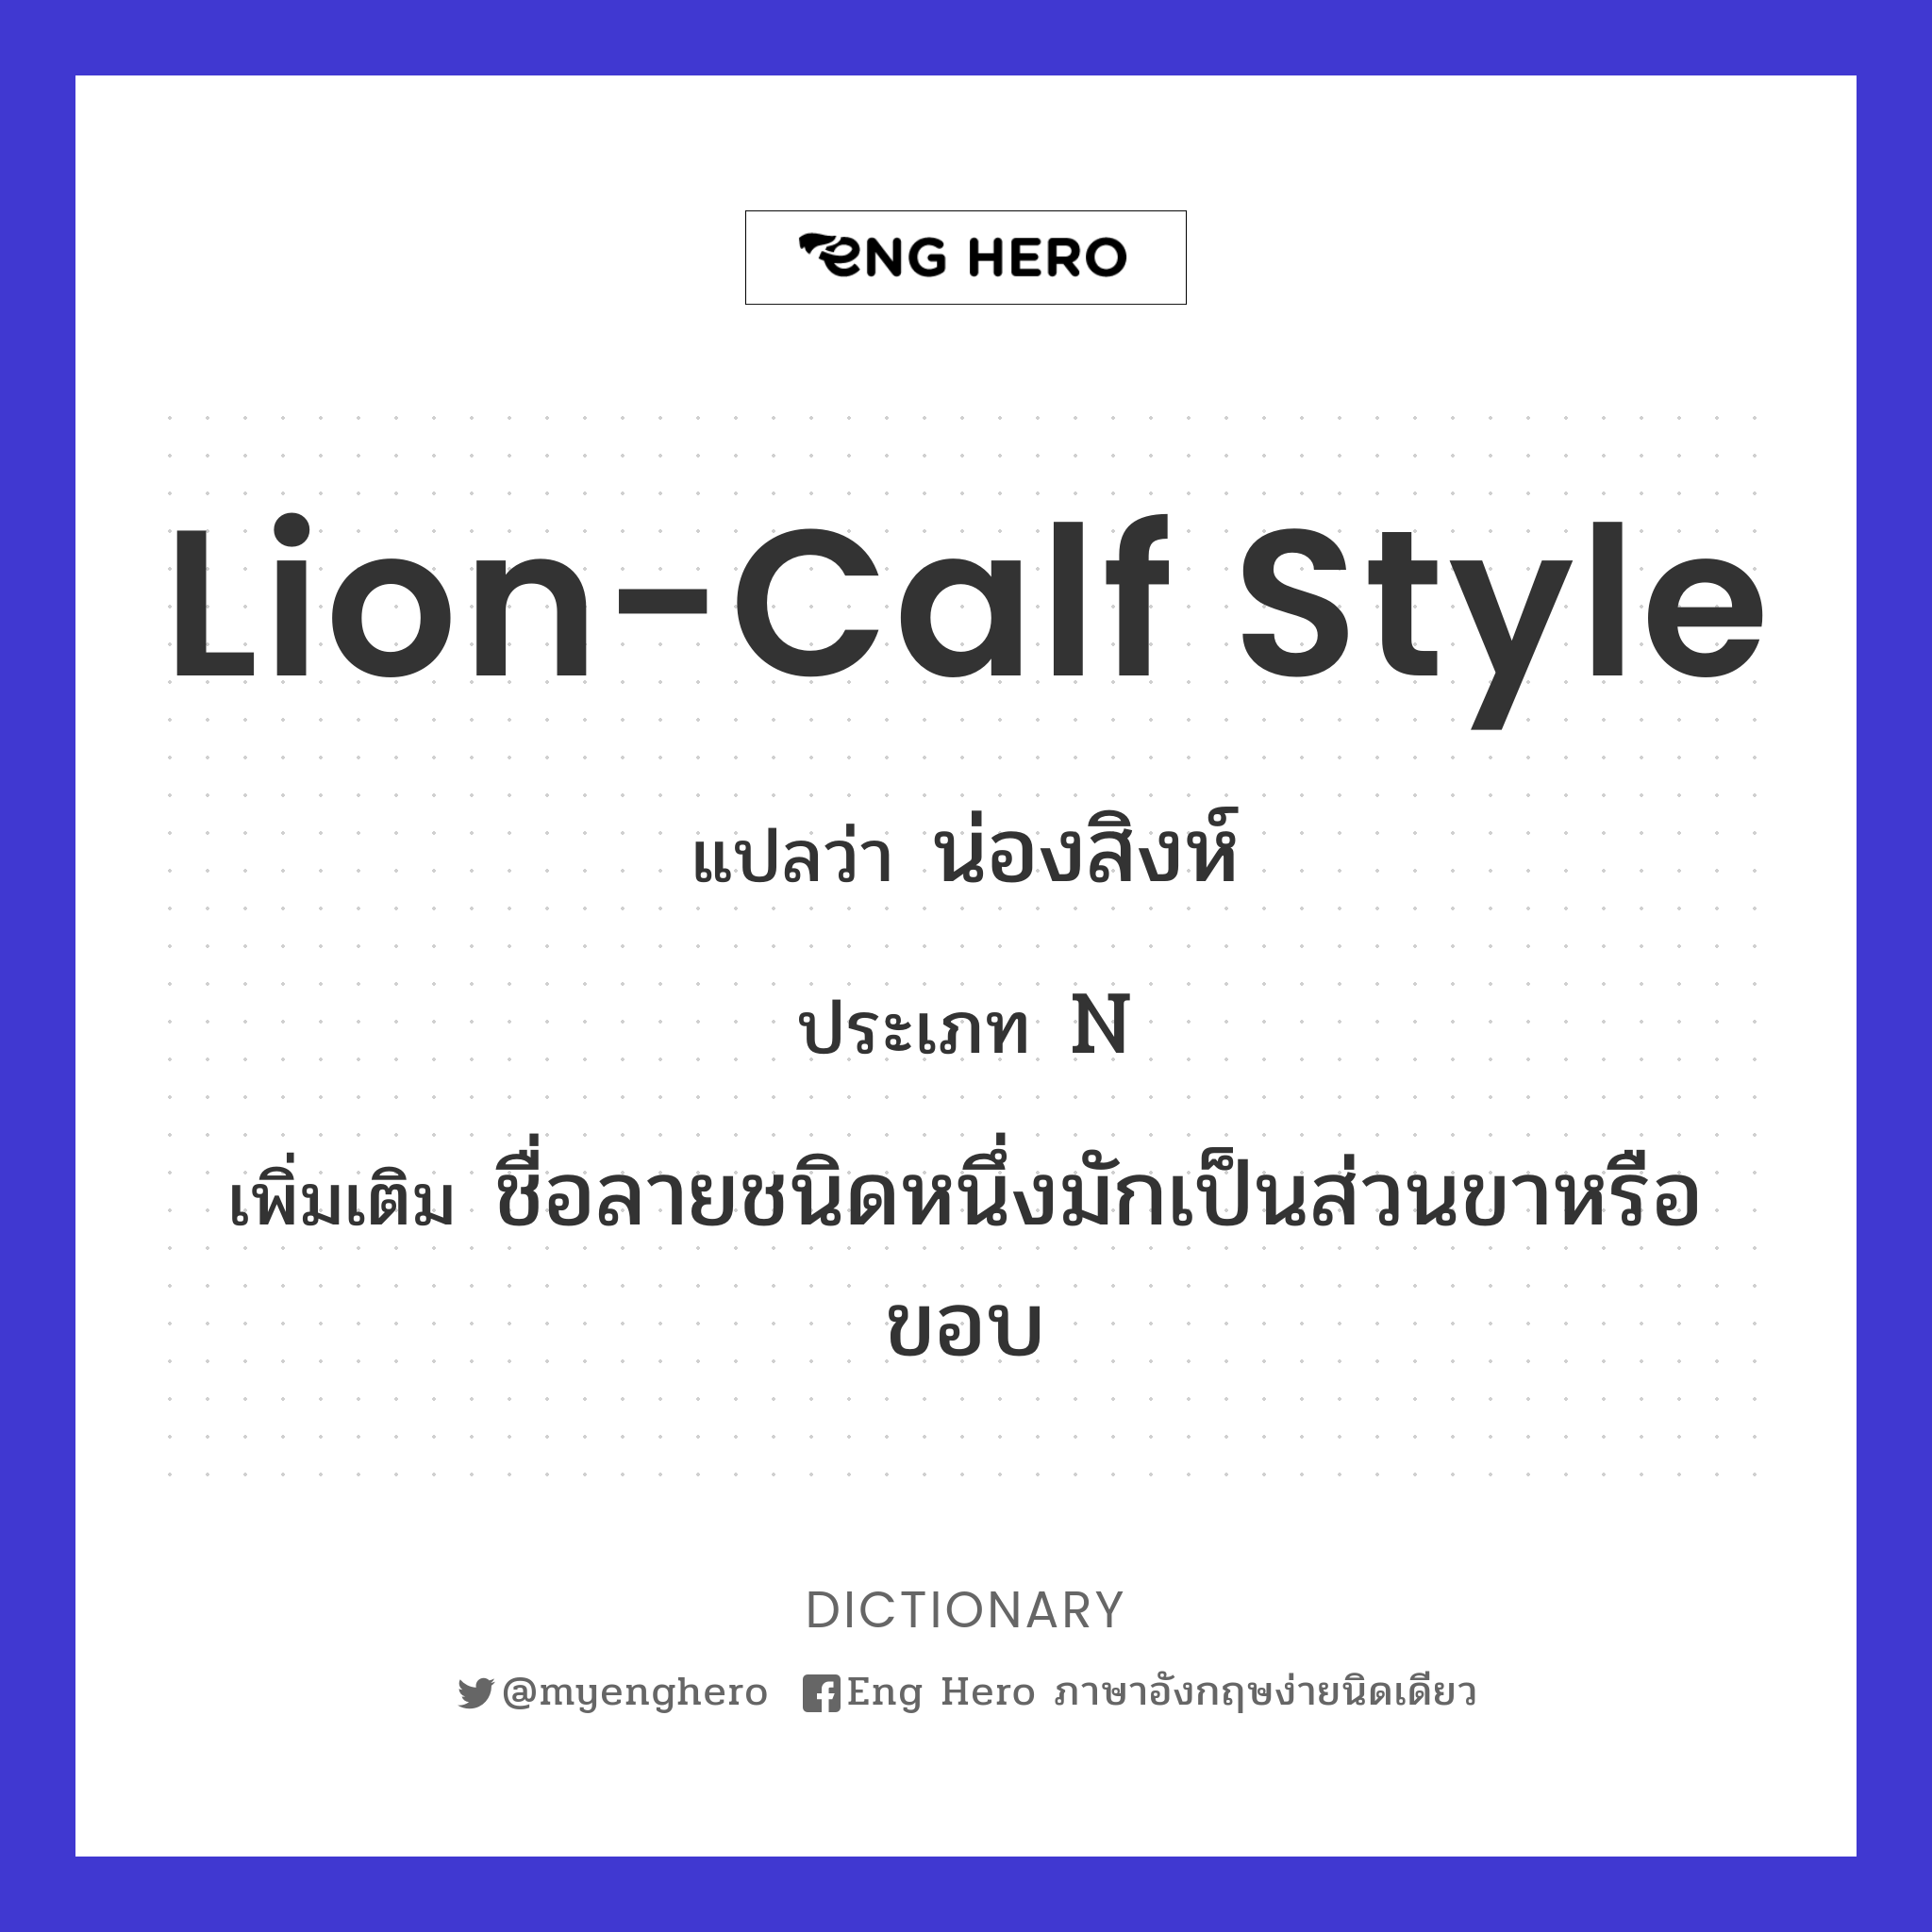 lion-calf style